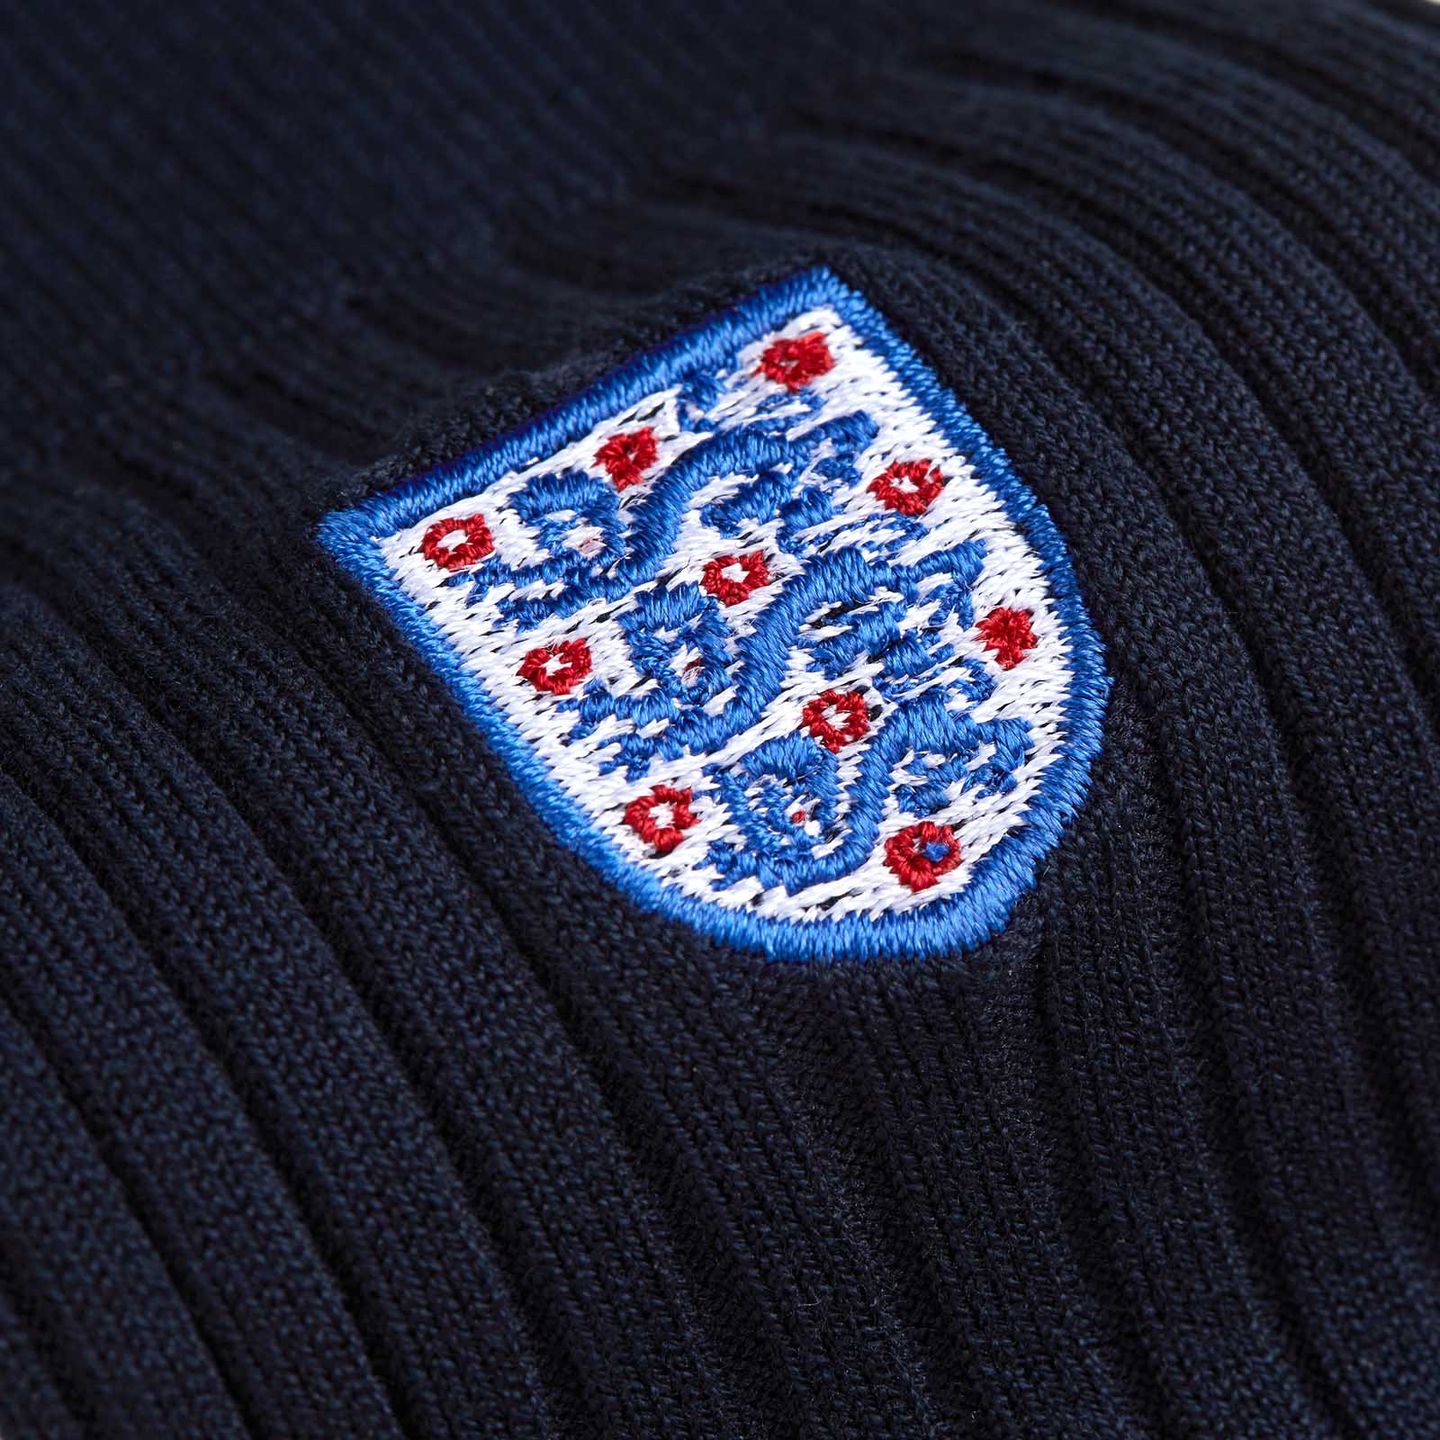 England badge on a black sock